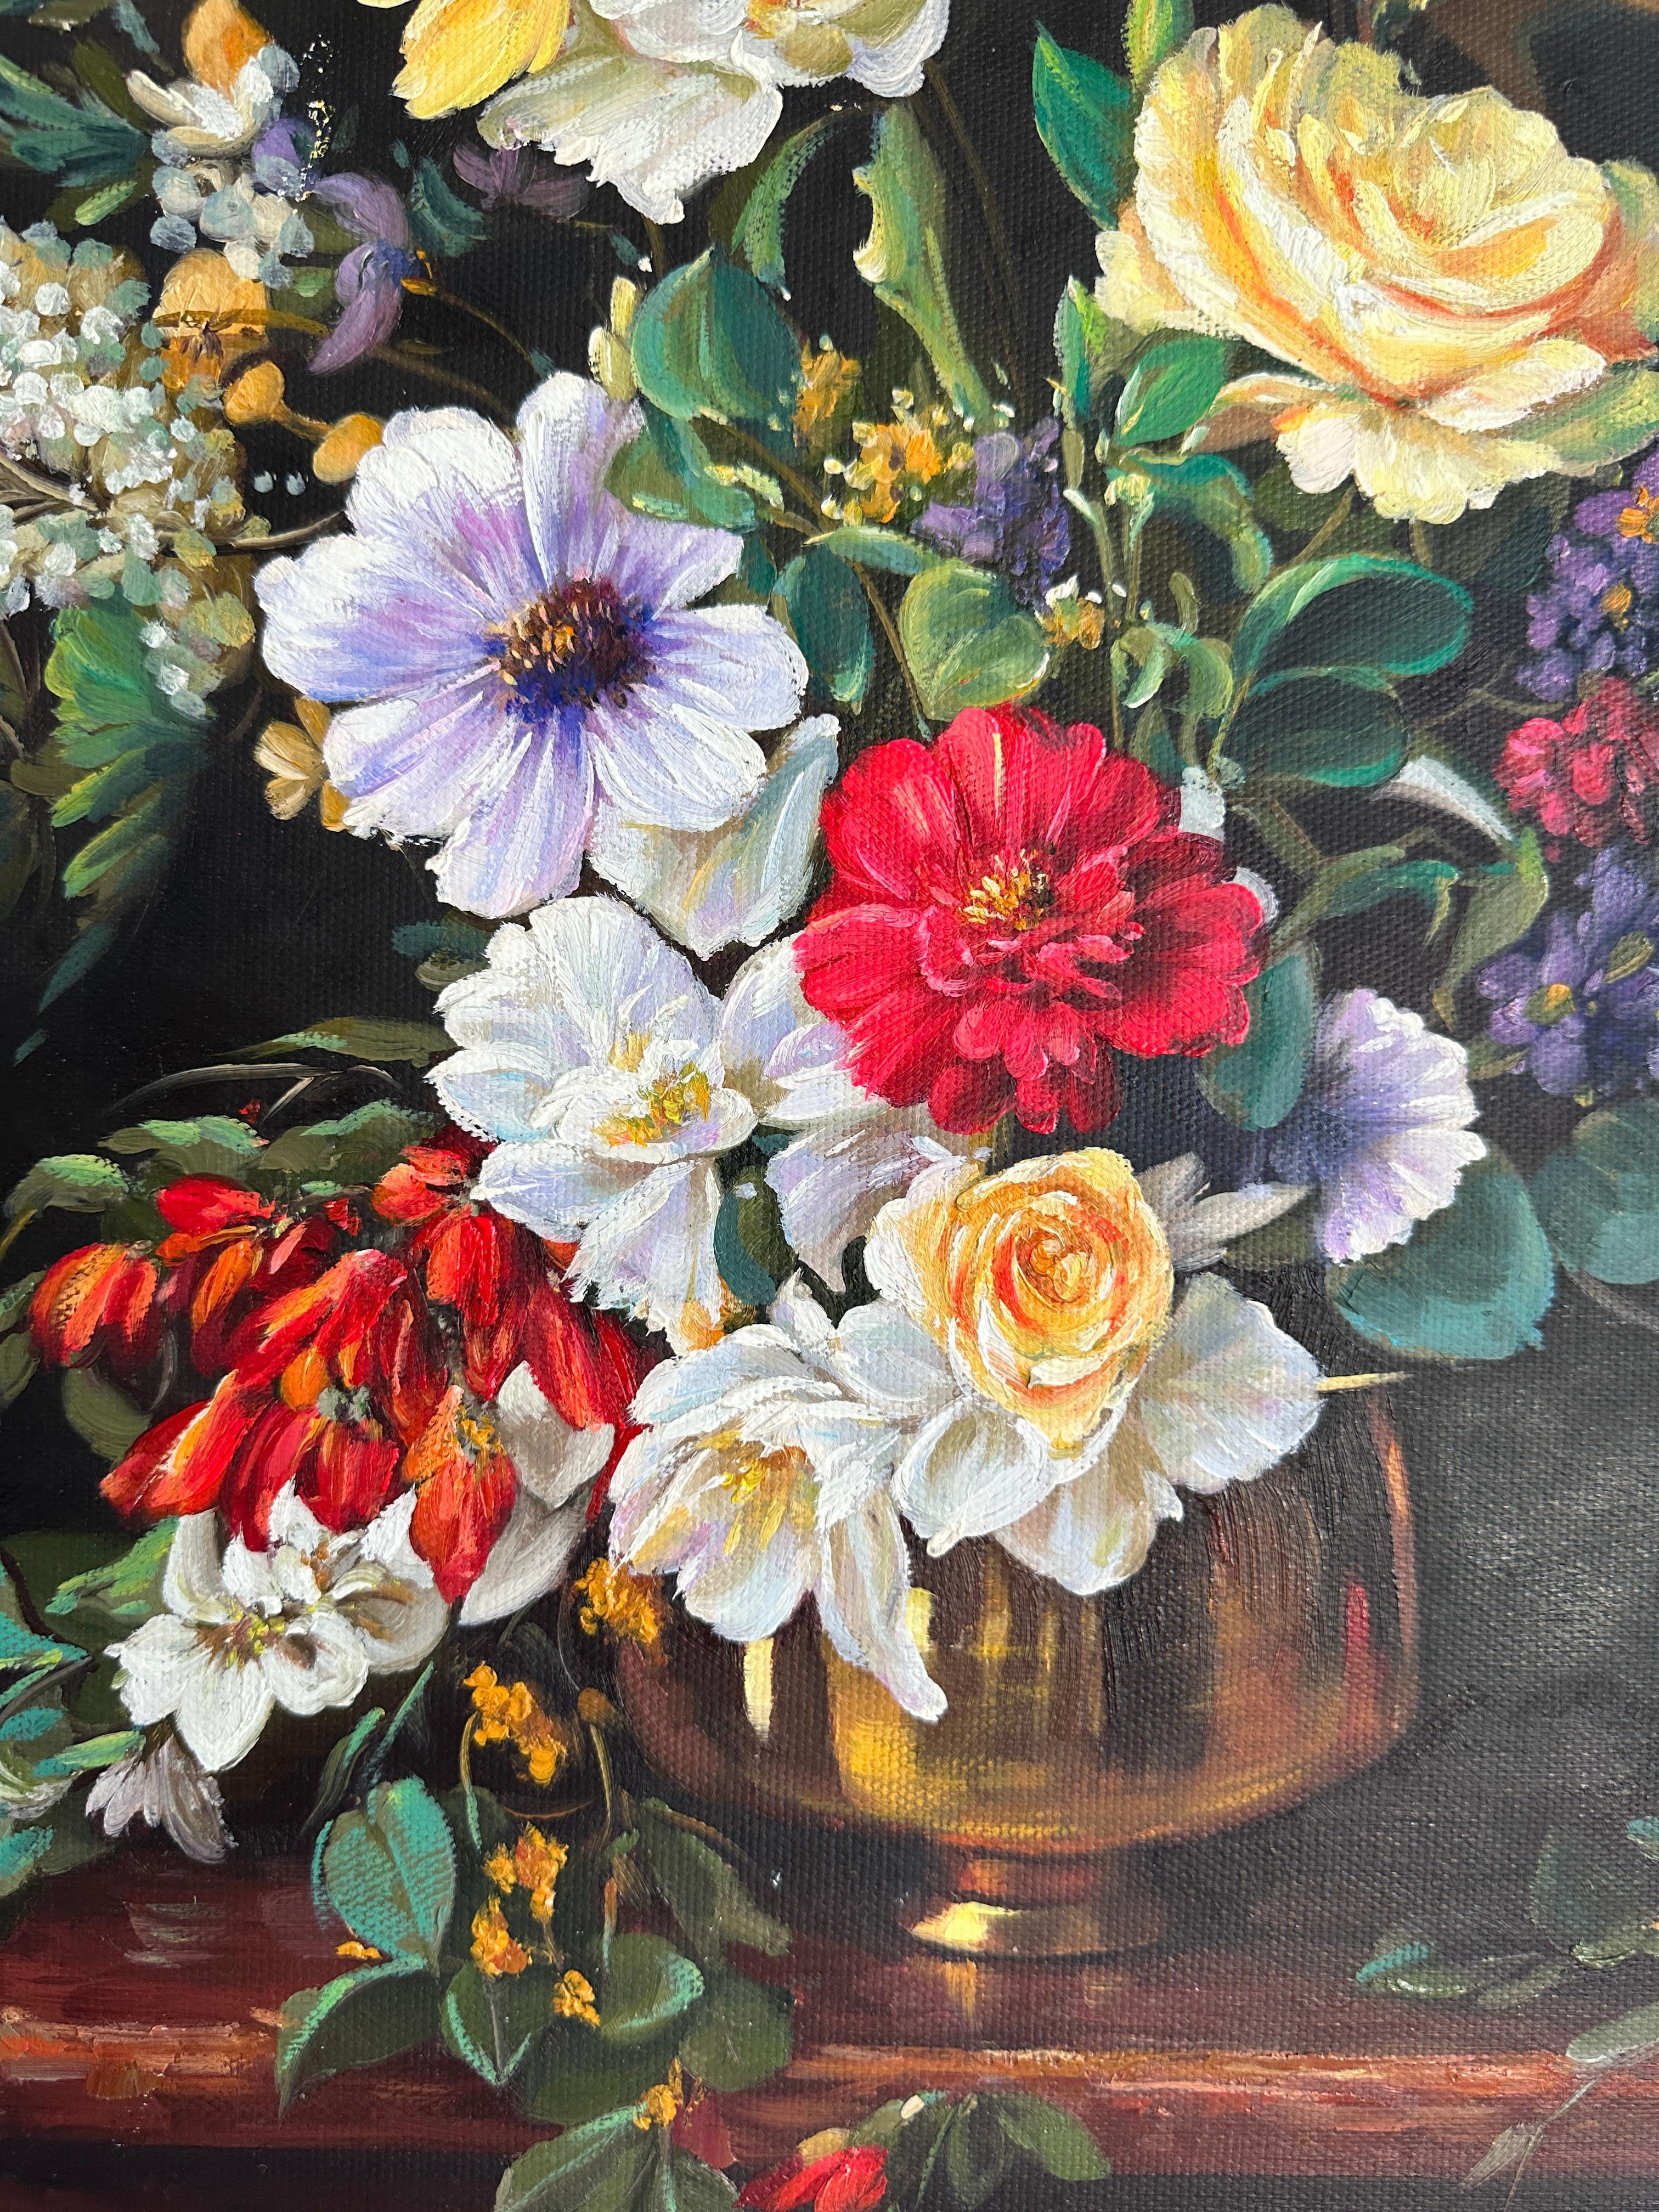 Heart over Head - Katharina Husslein Contemporary Flower Still life Oil Painting 4